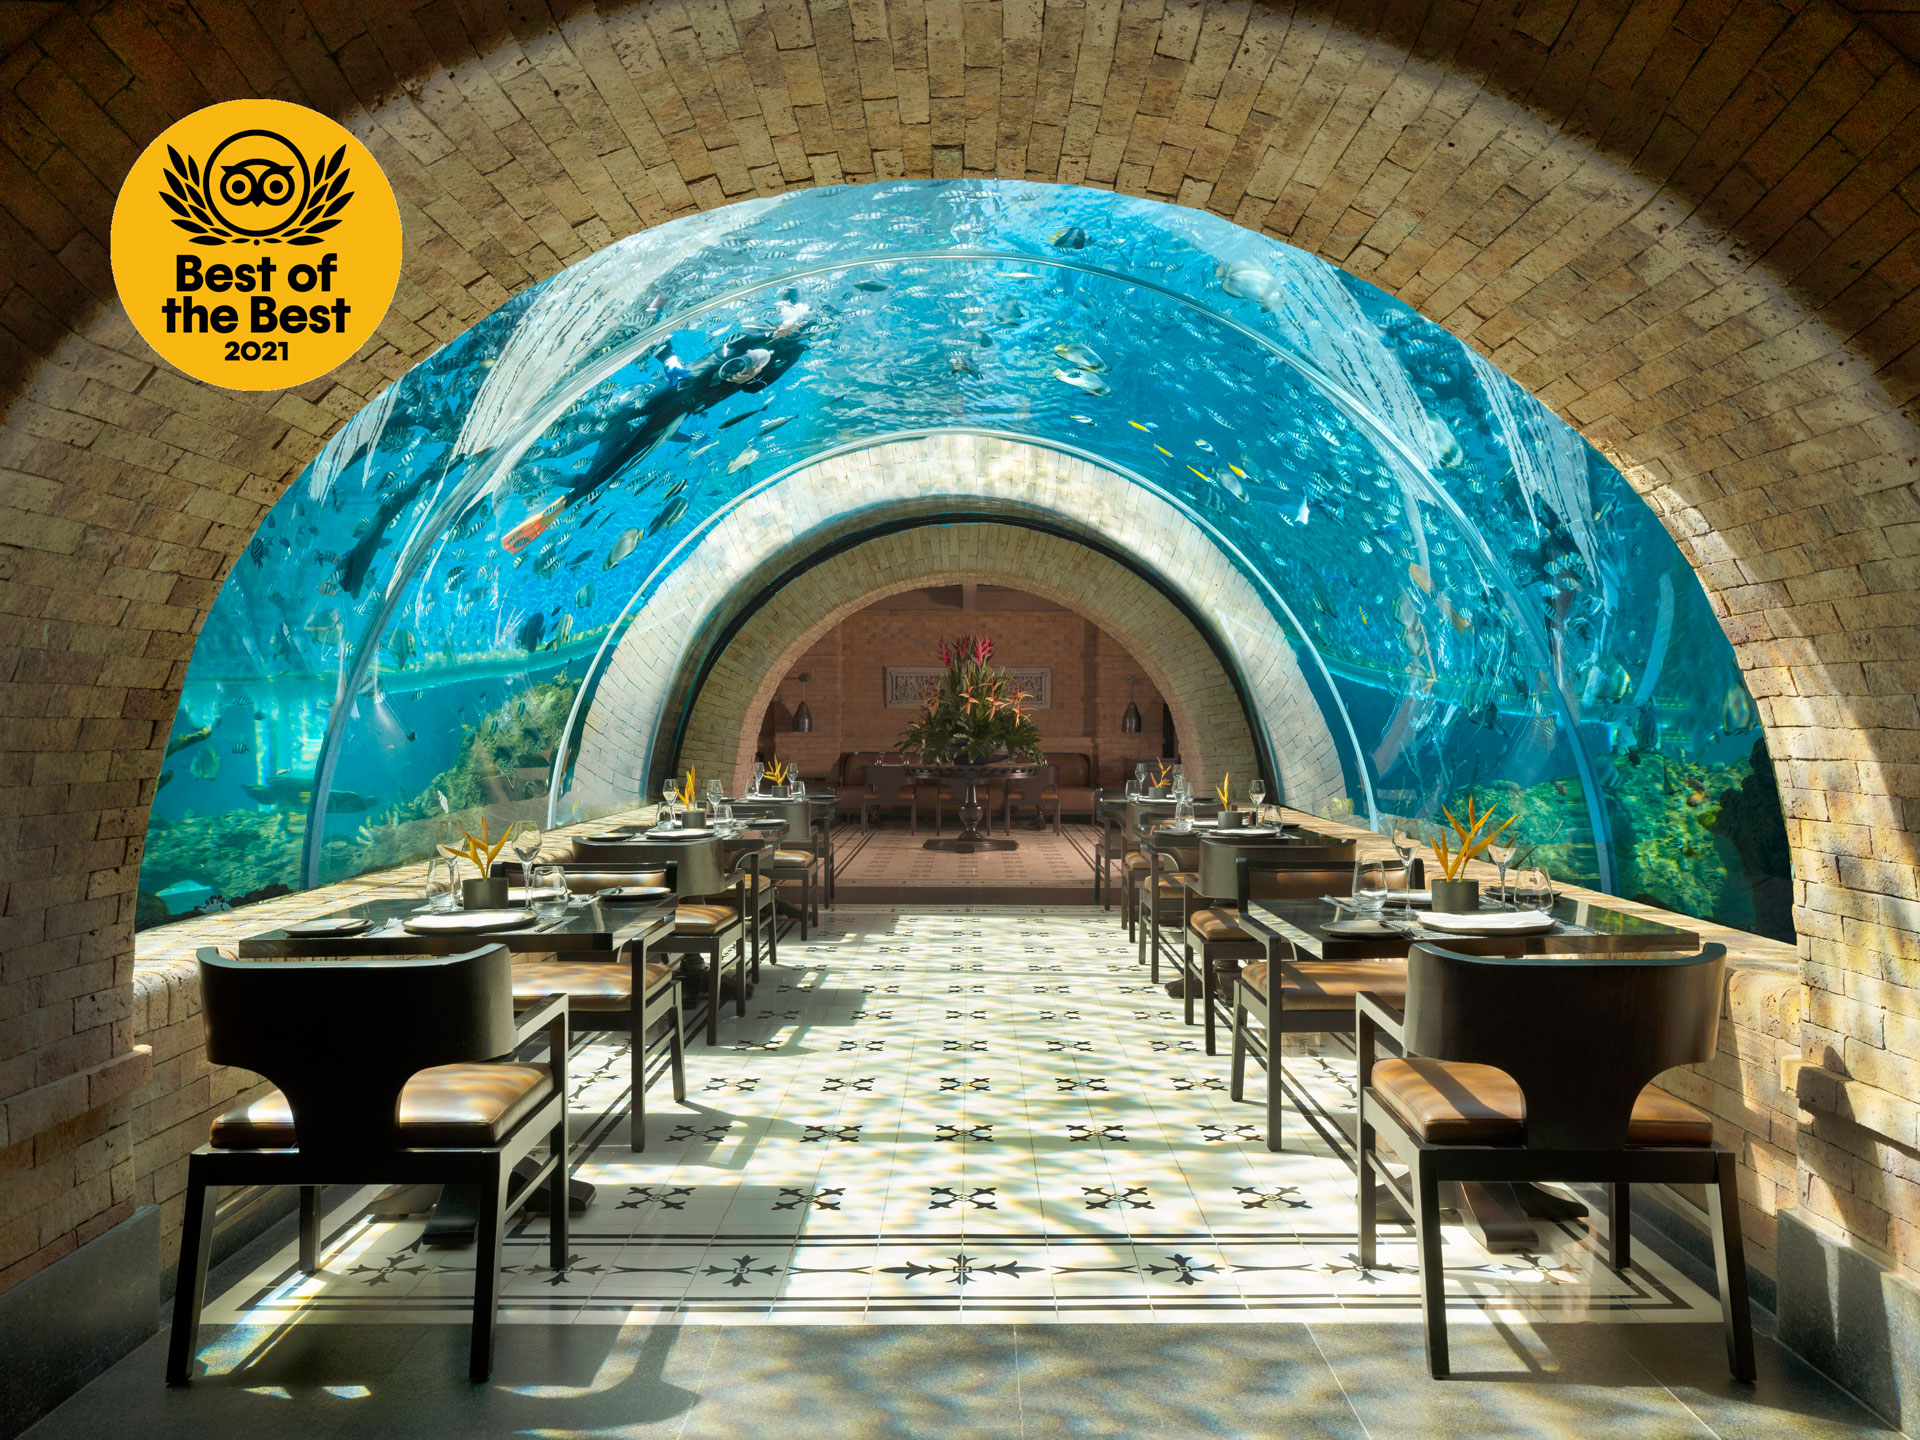 Koral Restaurant: The World’s #1 Picture-Perfect Restaurant